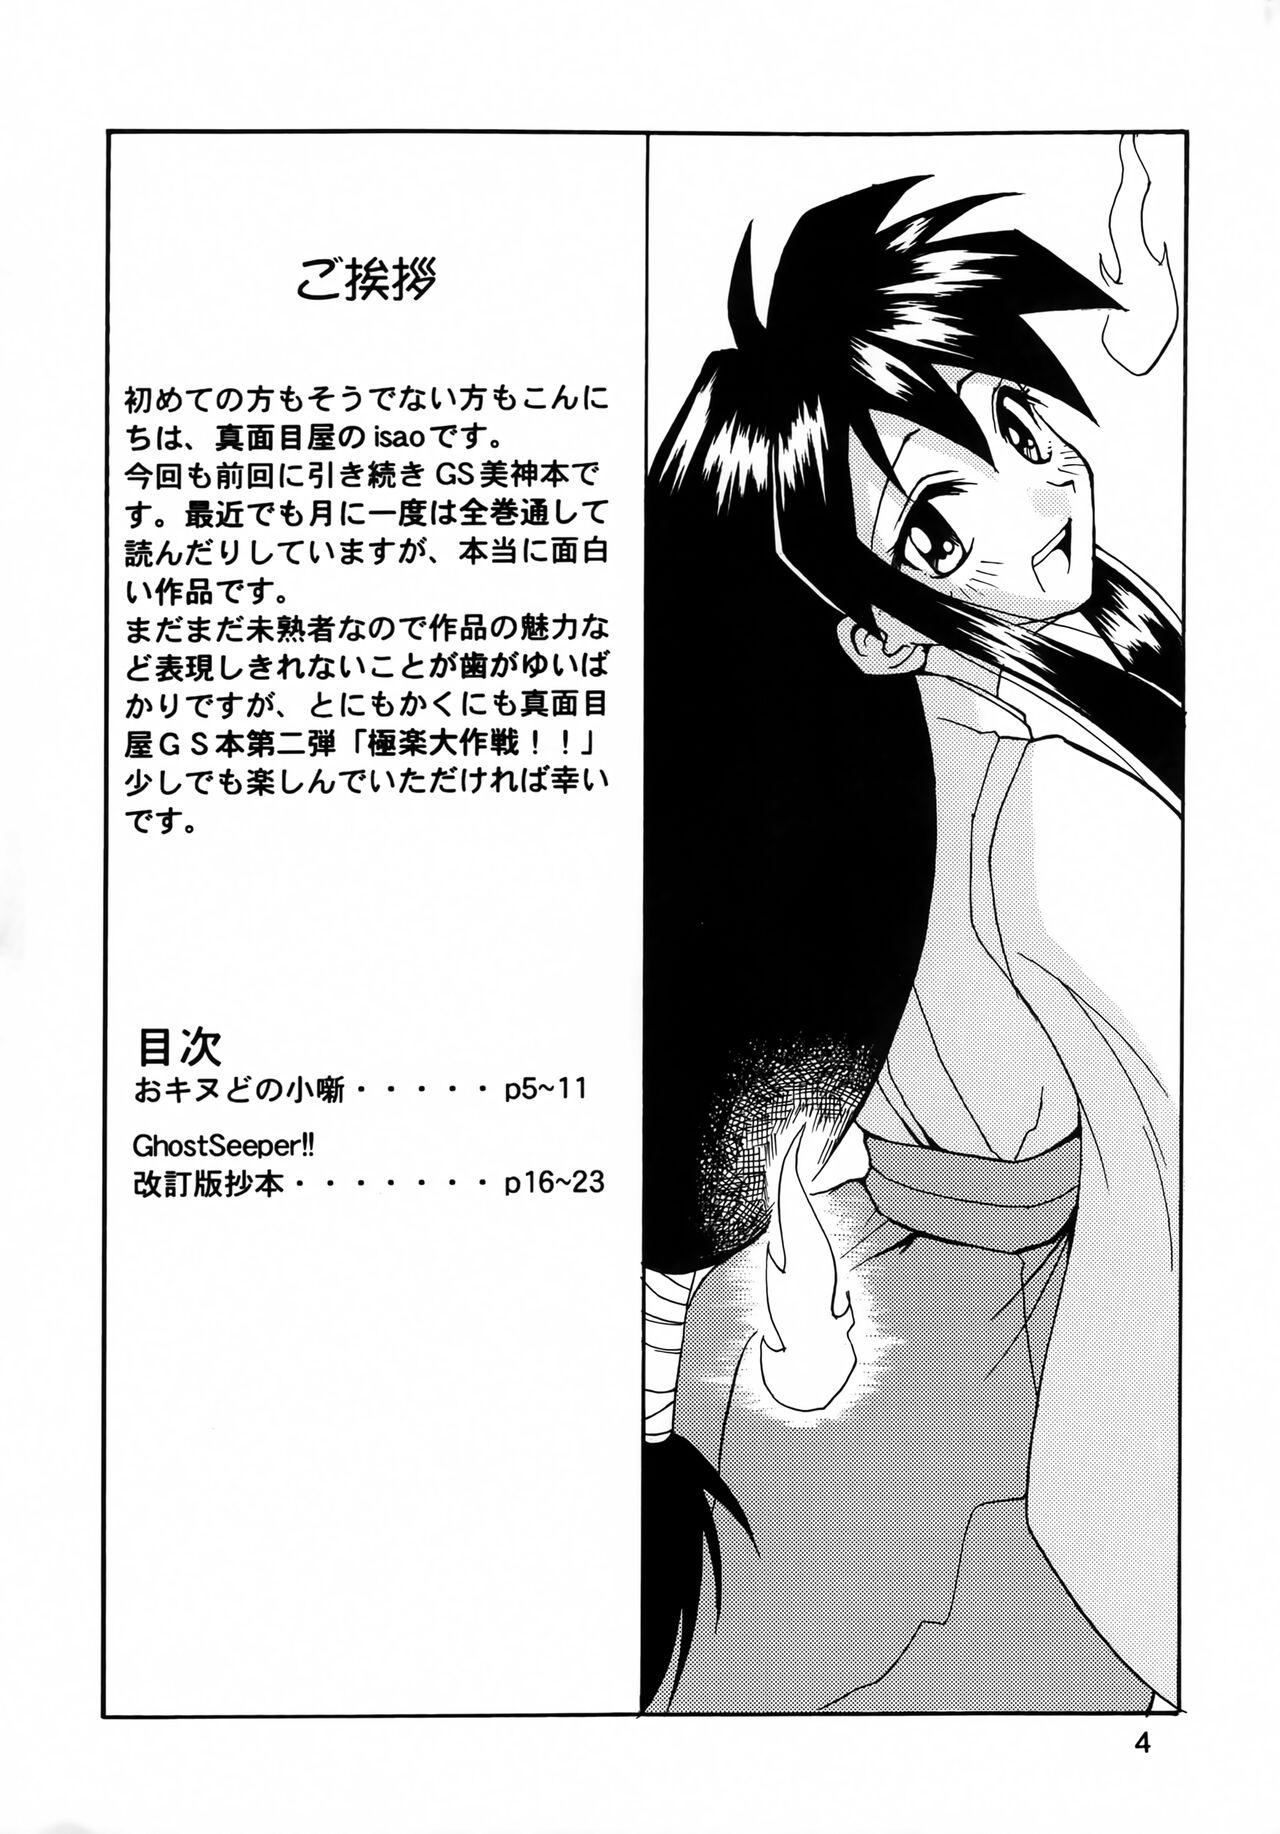 Amigo GhostSweeper!! 2 Gokuraku Daisakusen!! - Ghost sweeper mikami Kiss - Page 3